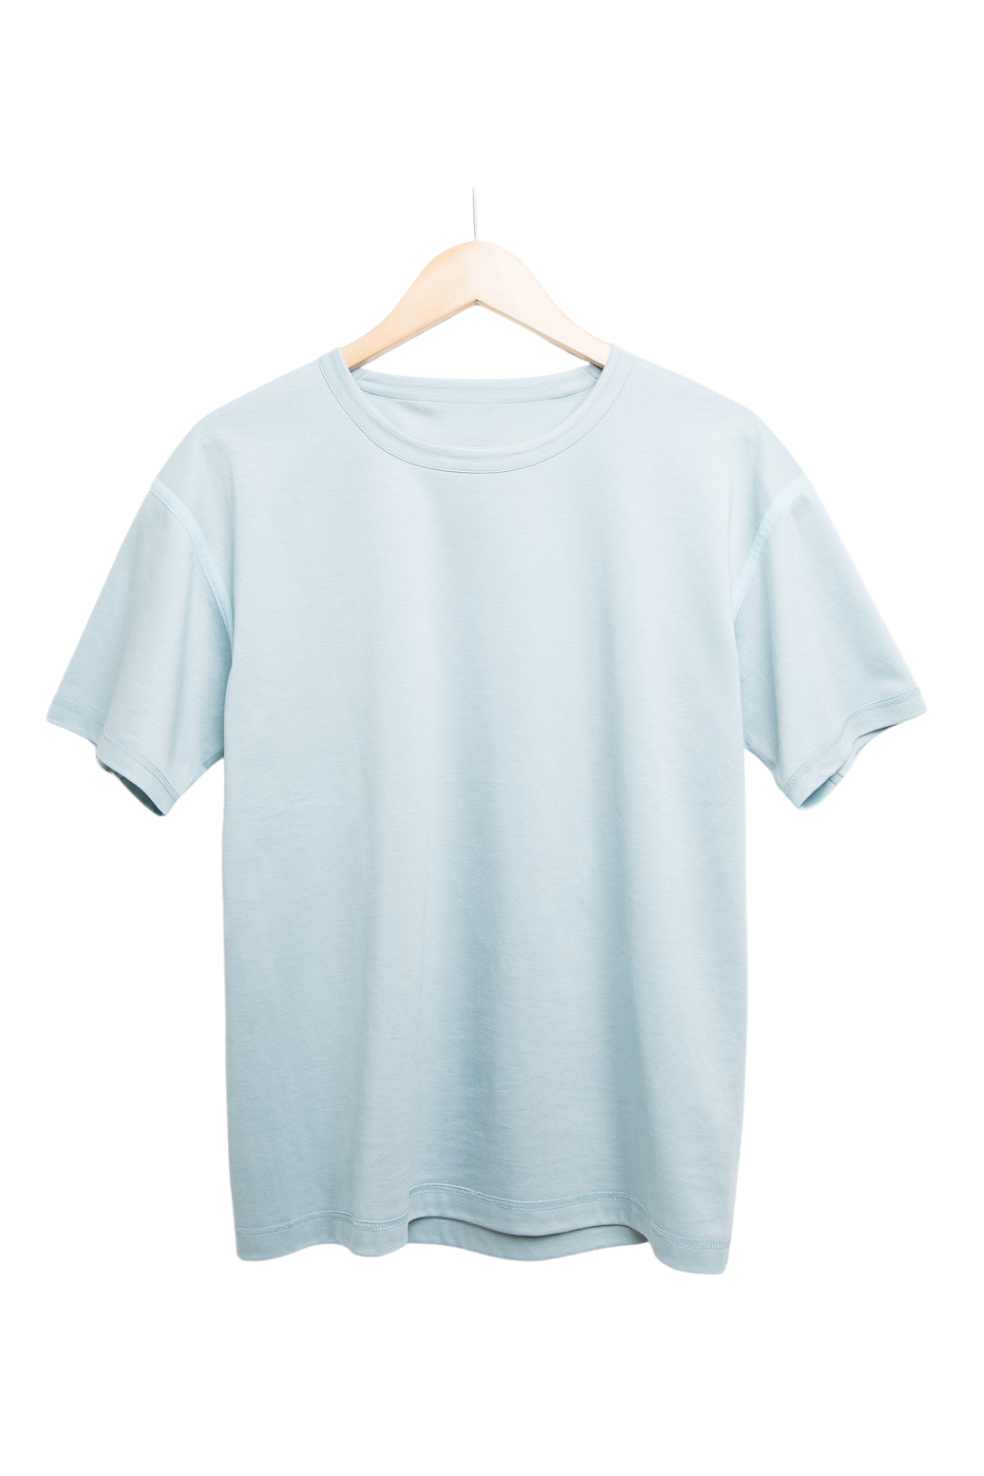 【KABIN-Tシャツ】【大人サイズ】縫い目外側/黒・白・カーキ・ピンク・ブルー・サックス